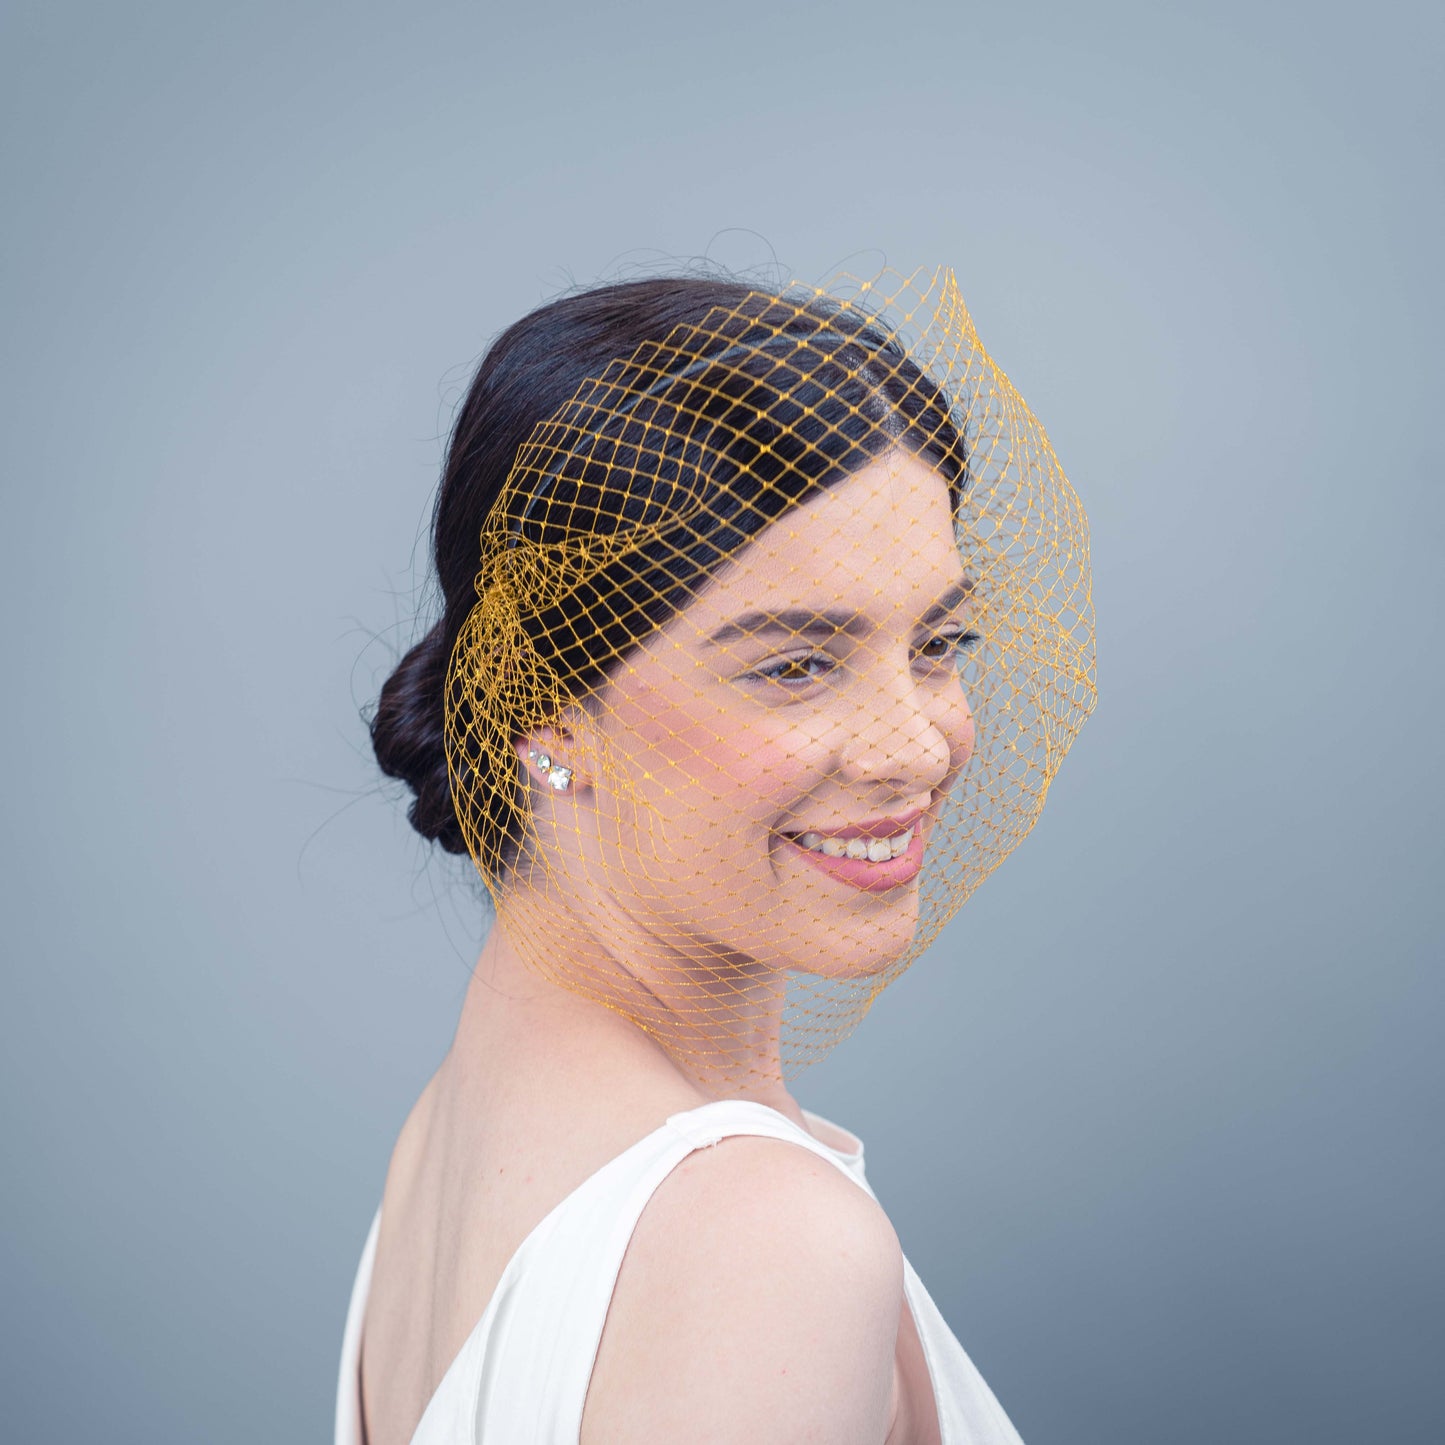 Valerie full face veil headpiece in gold